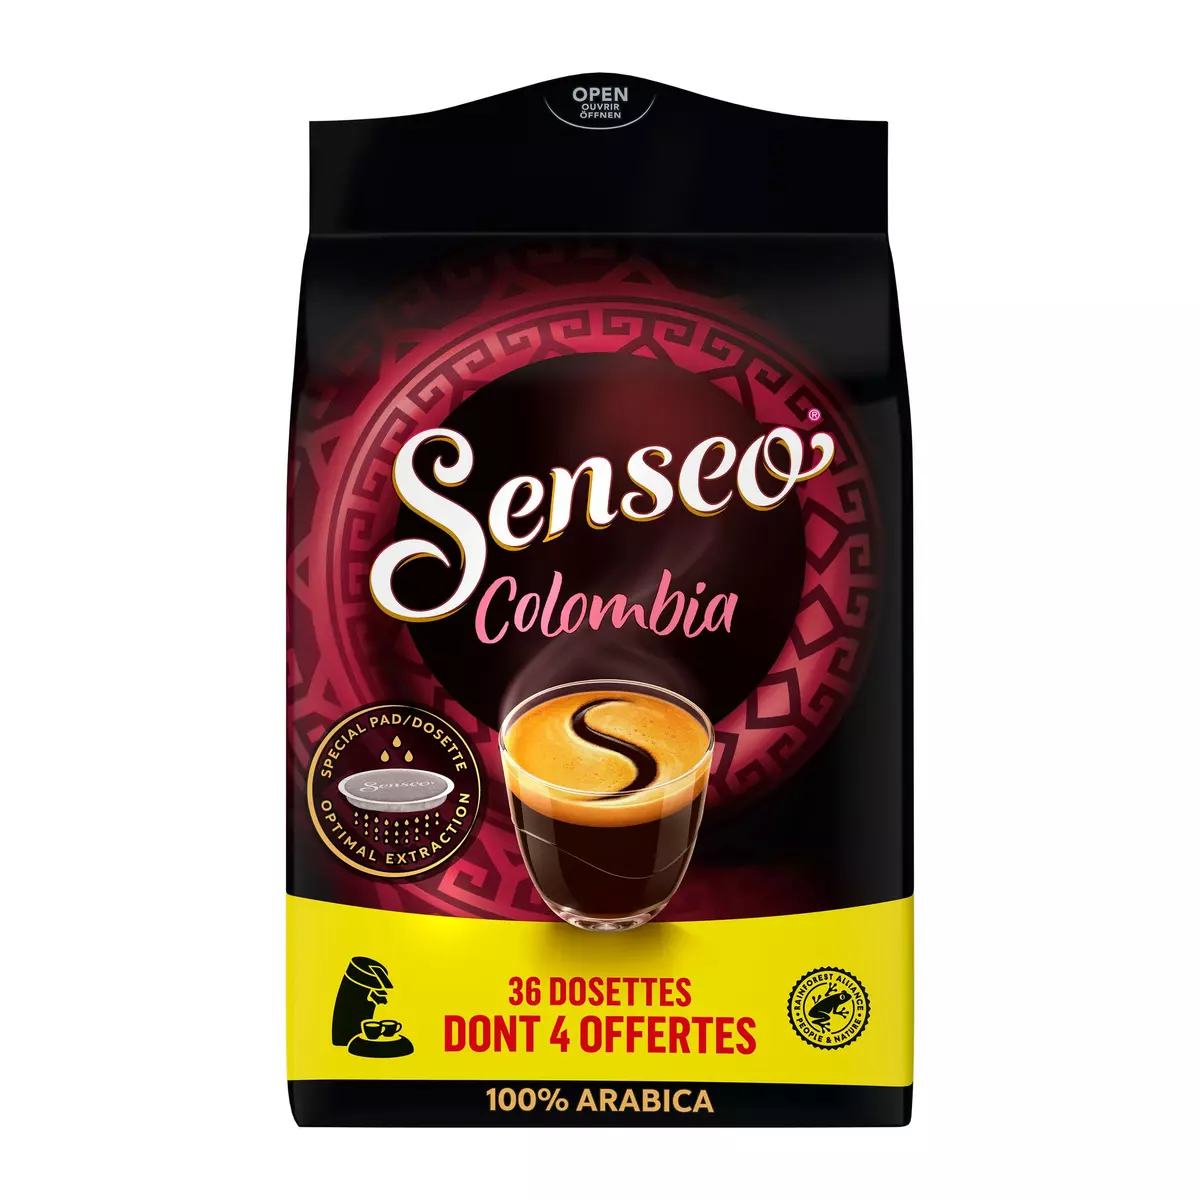 SENSEO Café en dosettes Colombia pur arabica 36 dosettes + 4 offertes 250g